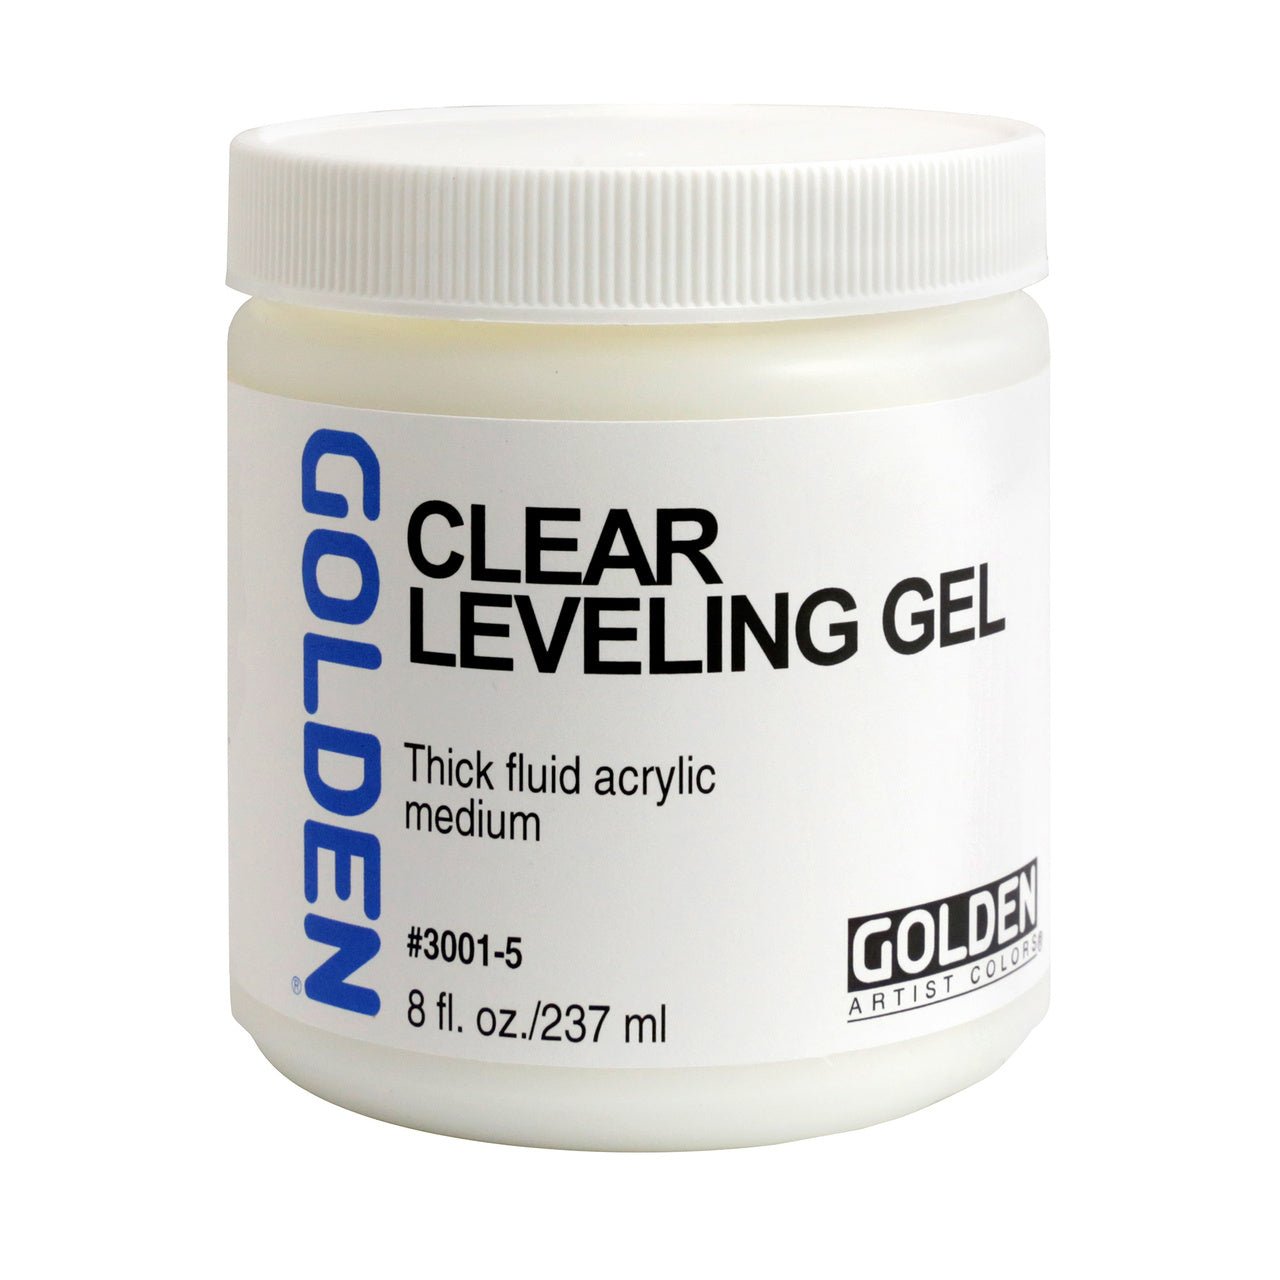 Golden Clear Leveling Gel 8 oz - merriartist.com